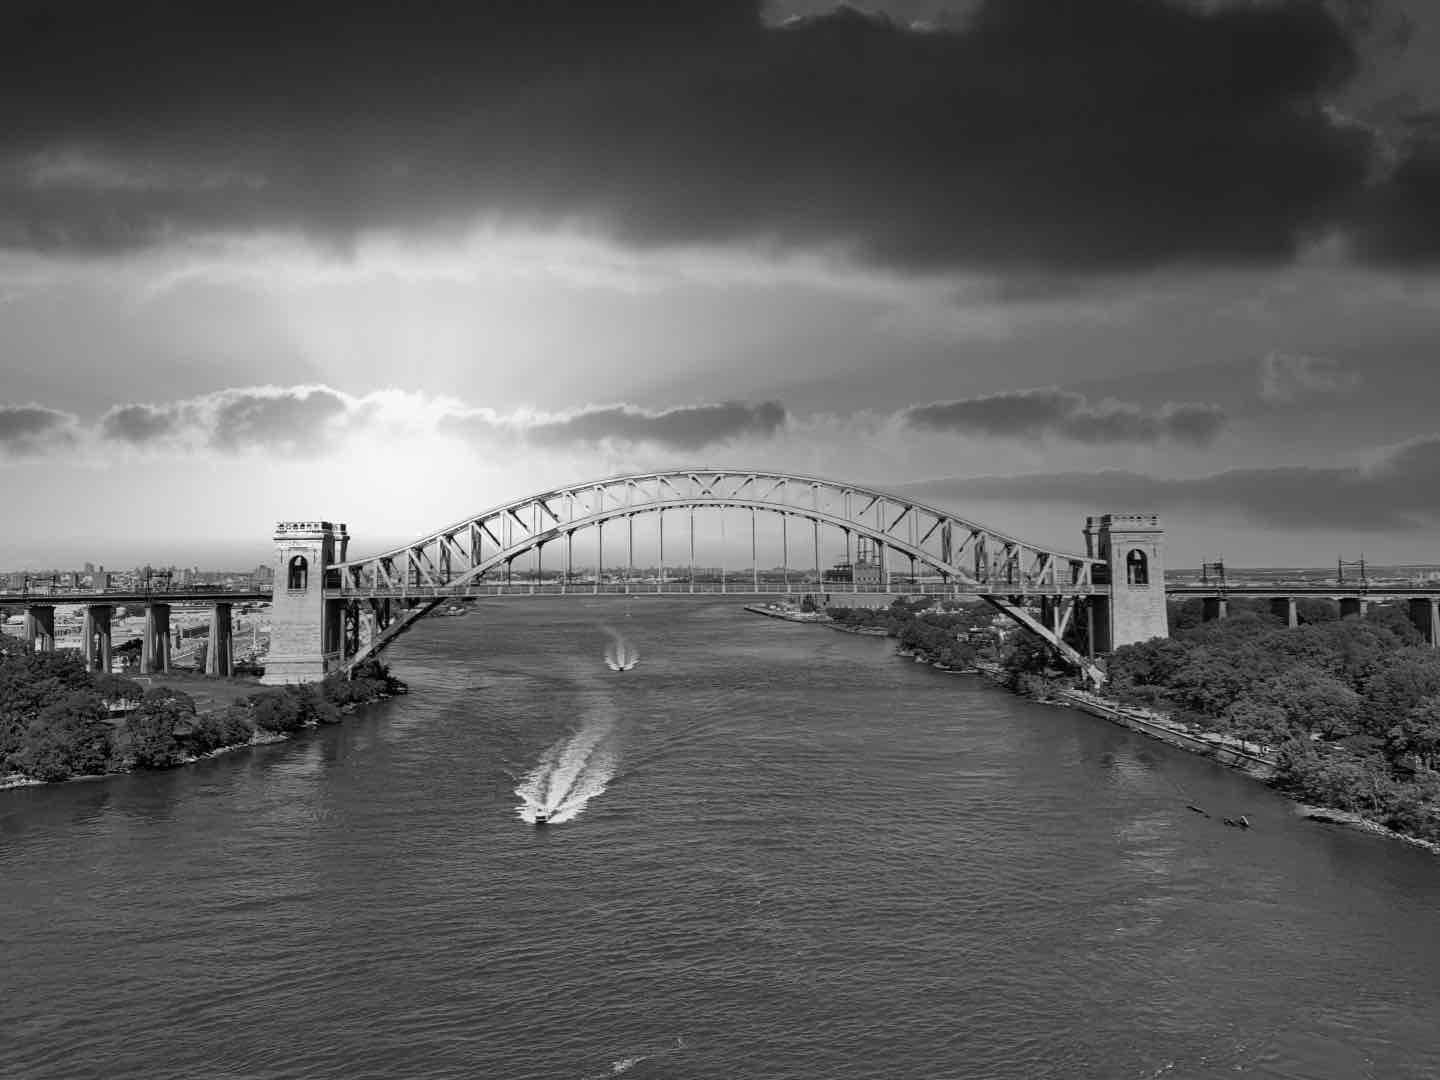 Hell Gate Bridge, New York